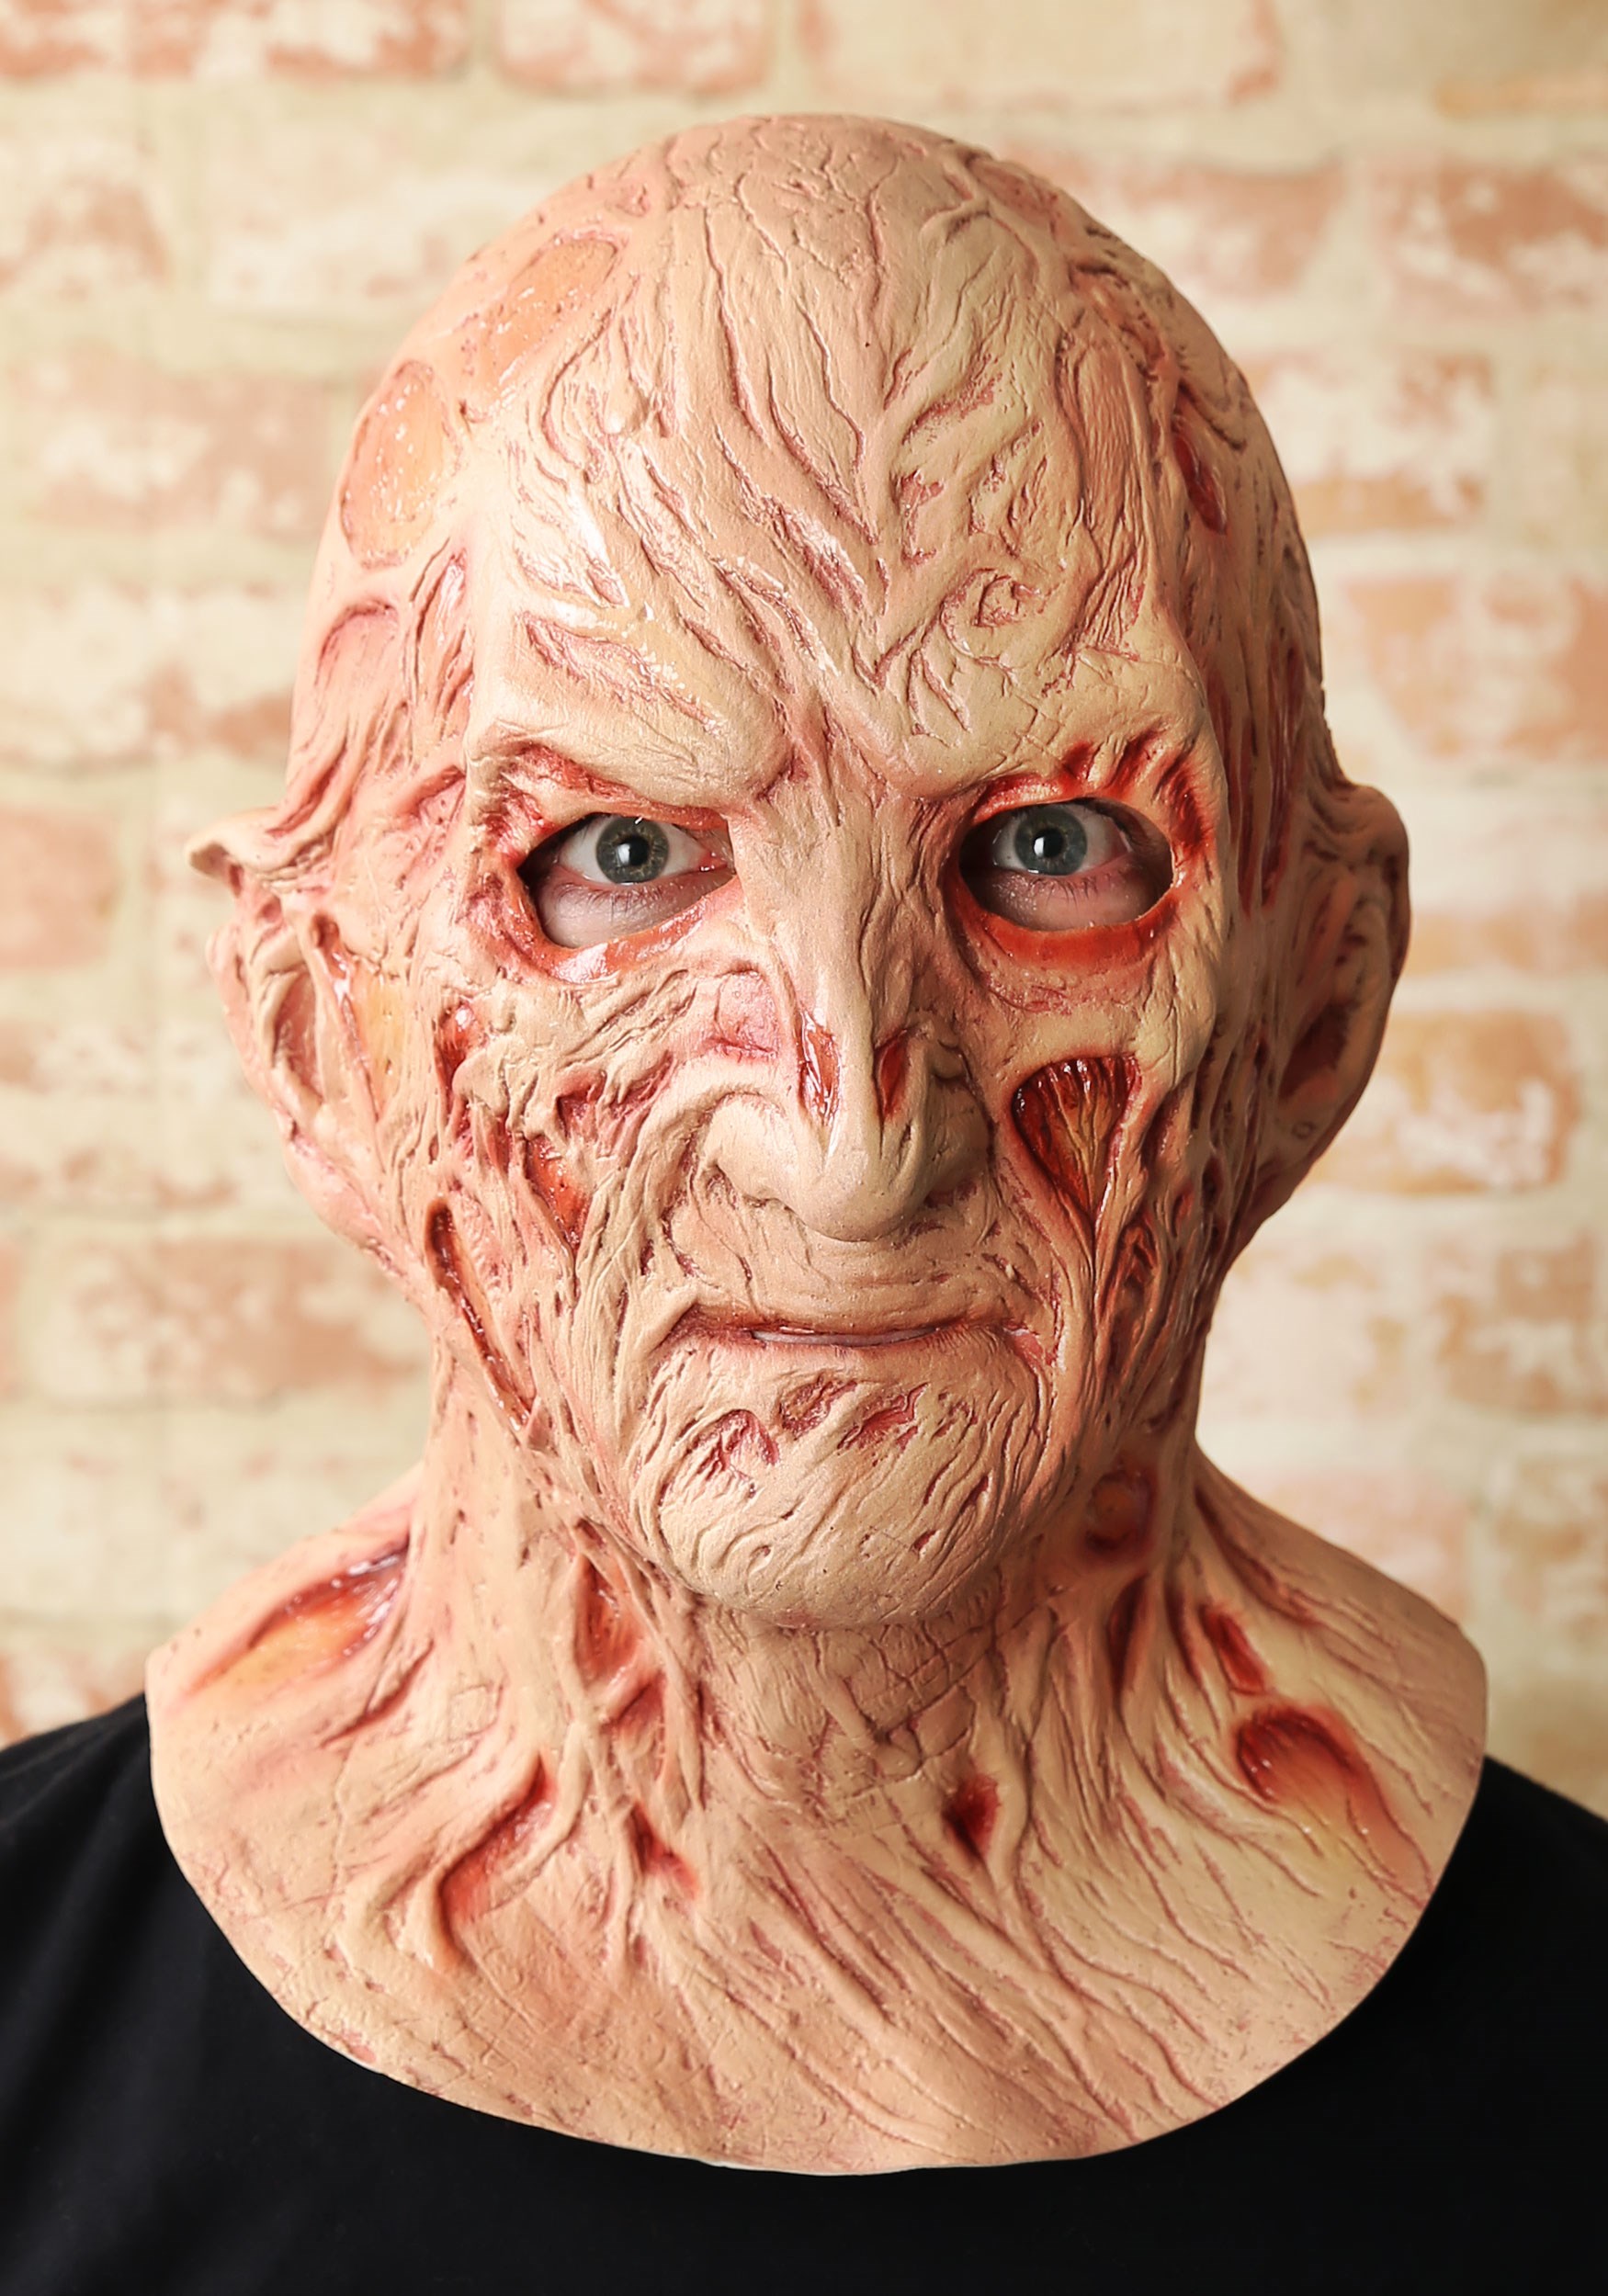 Nightmare on Elm Street 4 Freddy Krueger Mask Freddy Kreuger Costumes for Halloween